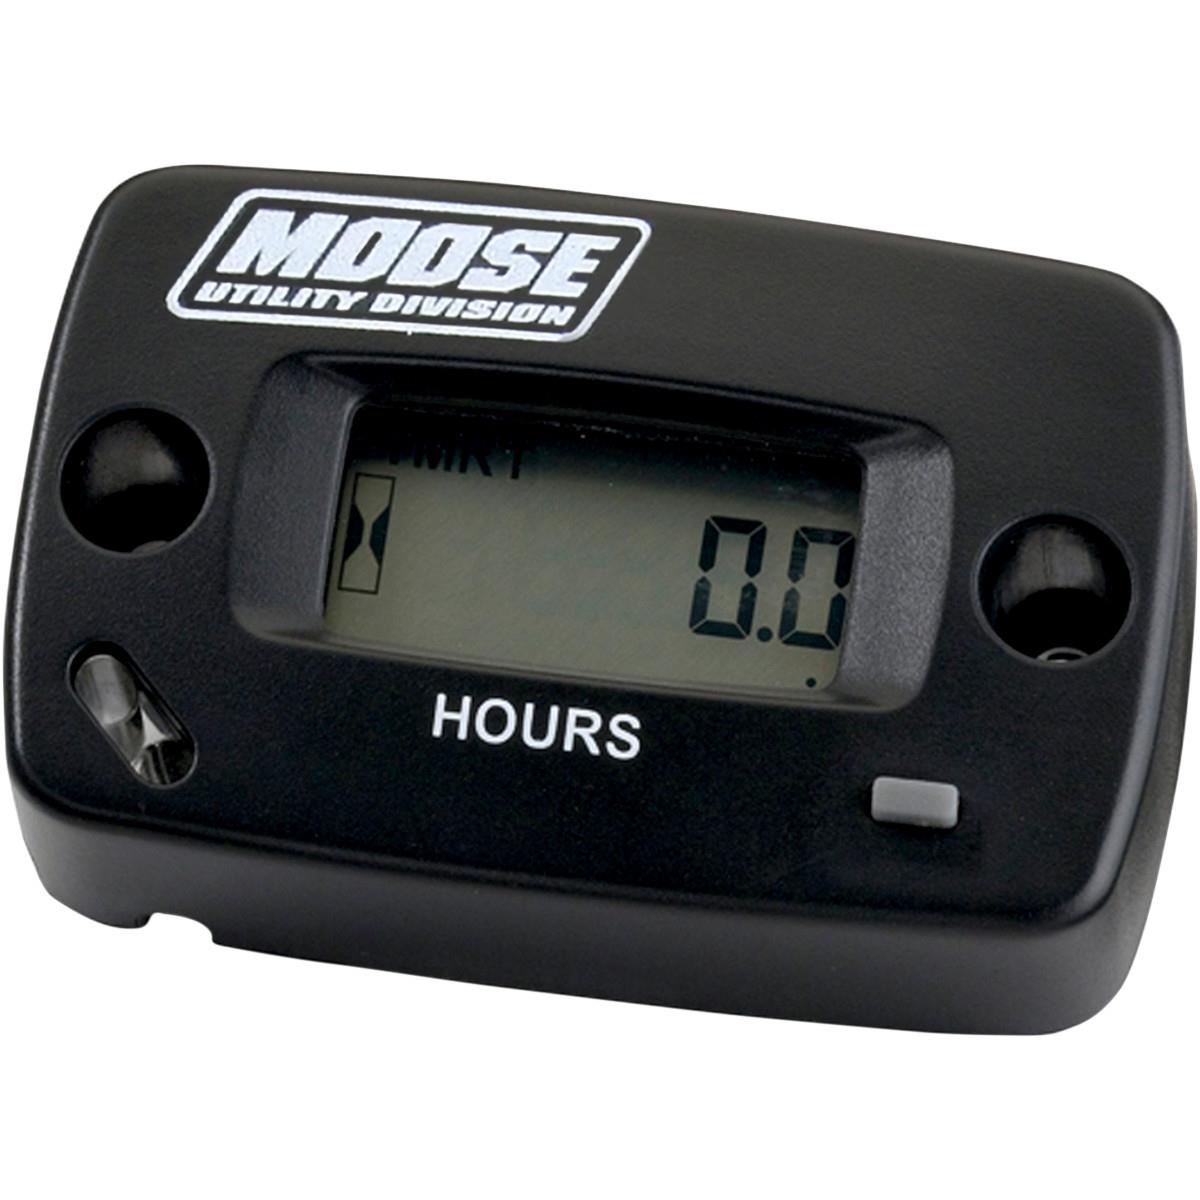 Moose Racing Contaore  Wireless e resettabile